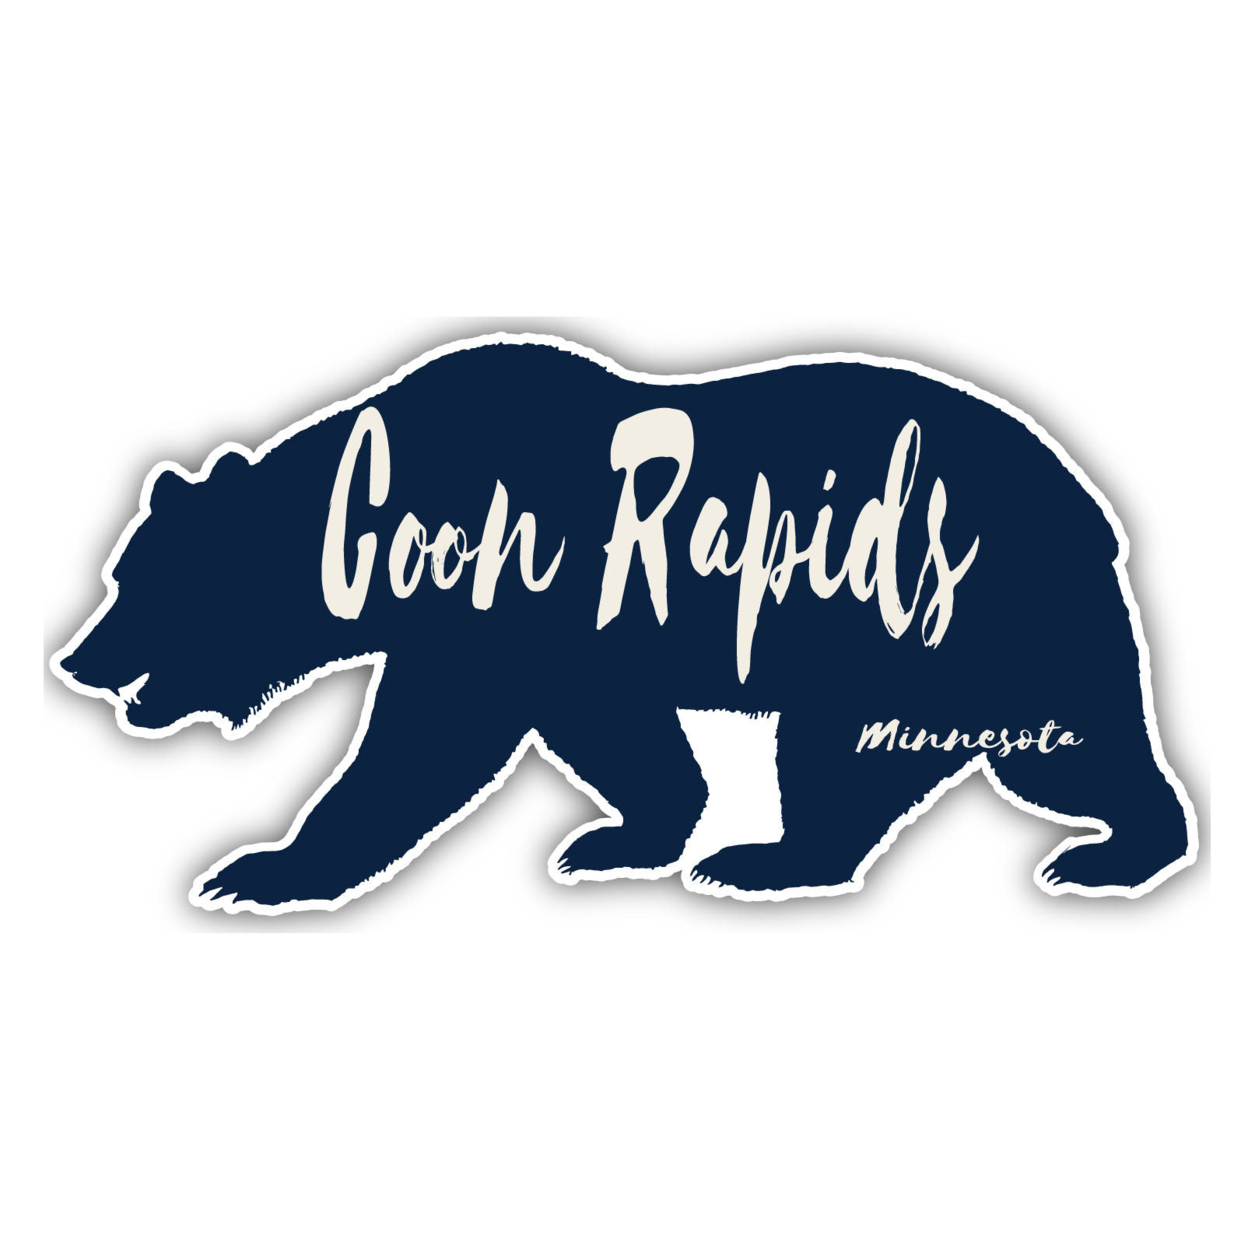 Coon Rapids Minnesota Souvenir Decorative Stickers (Choose Theme And Size) - Single Unit, 2-Inch, Camp Life